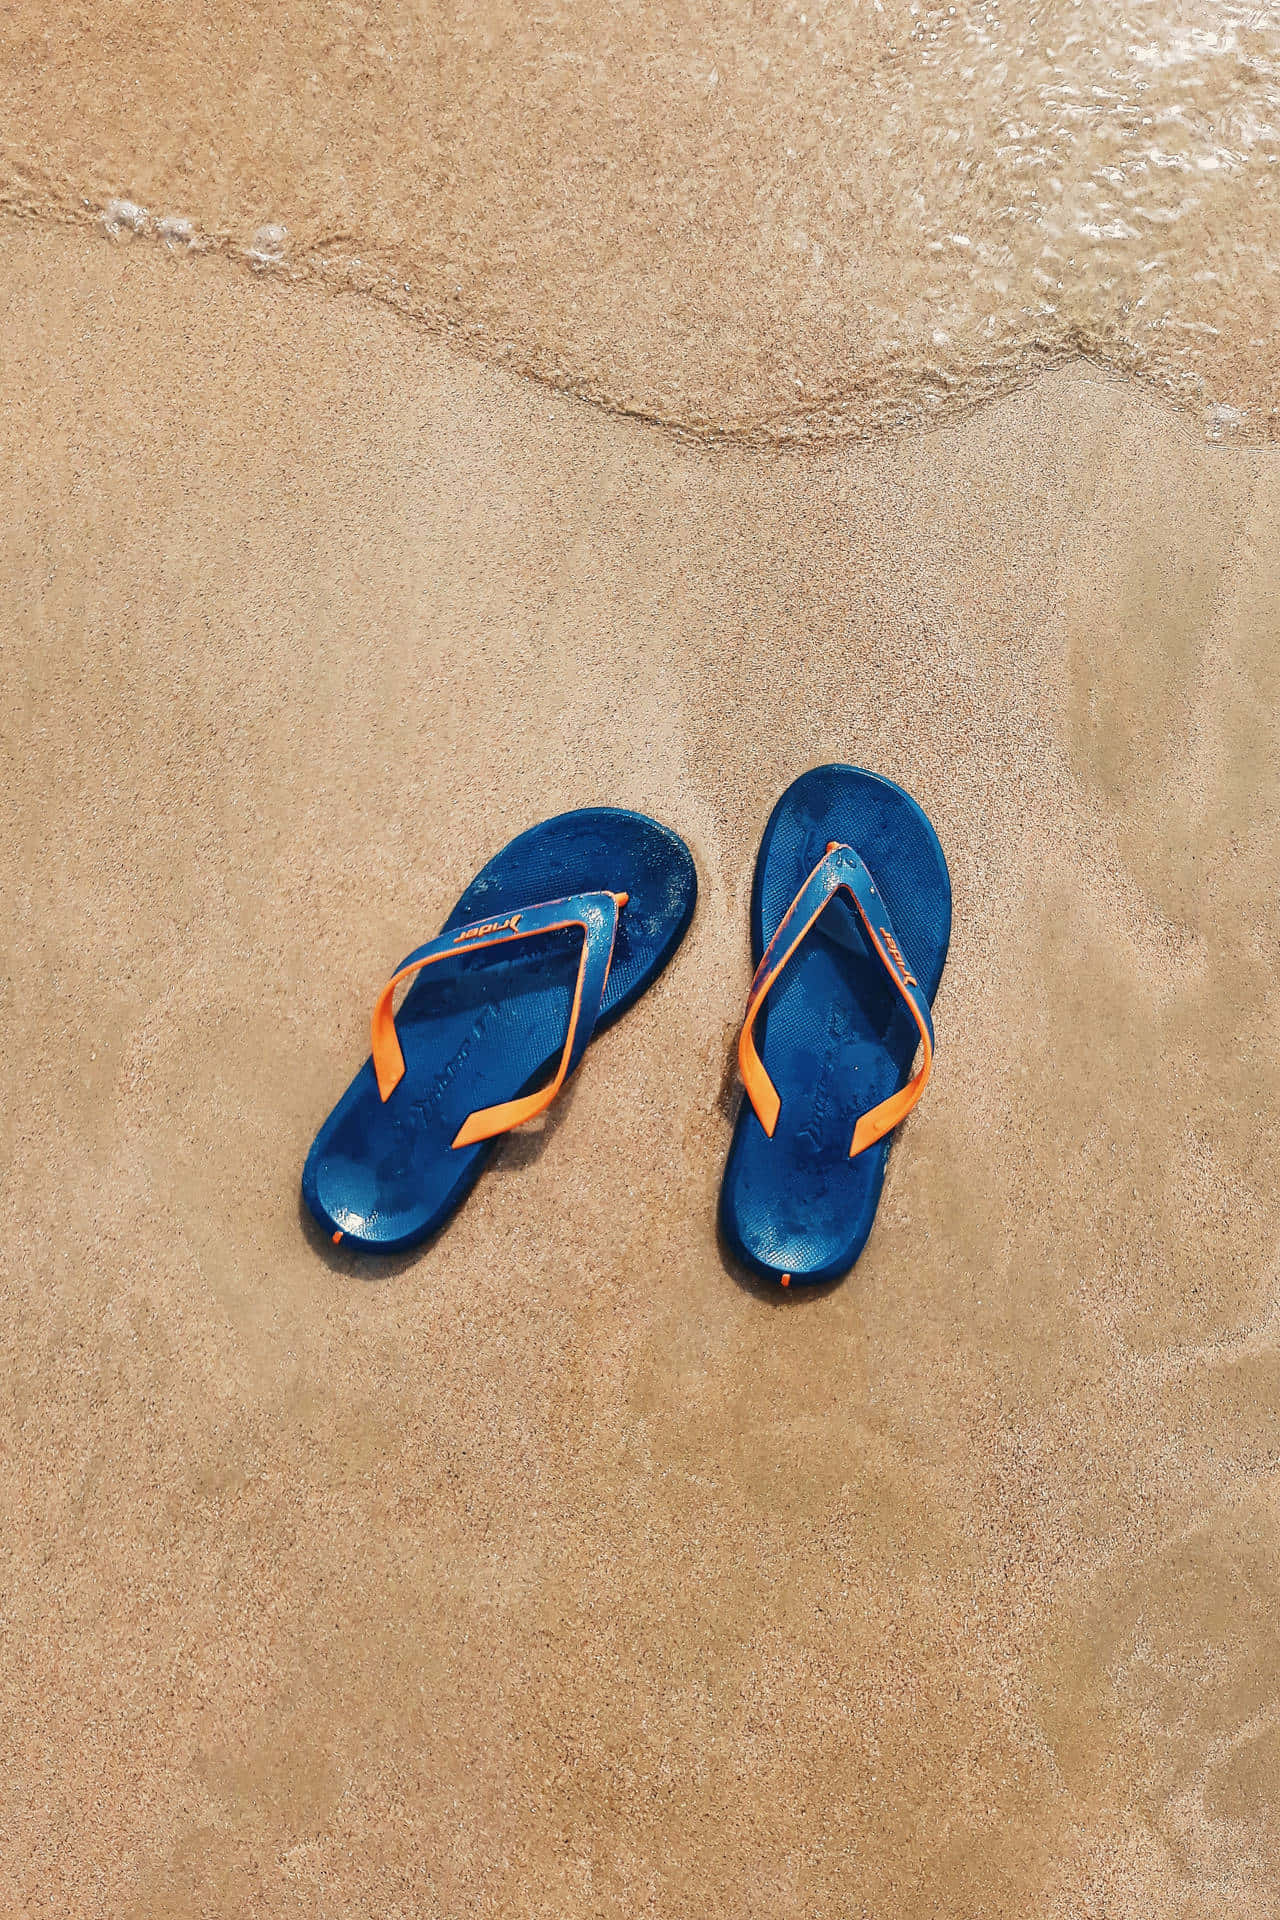 Stylish Beach Sandals on Vibrant Shore Wallpaper